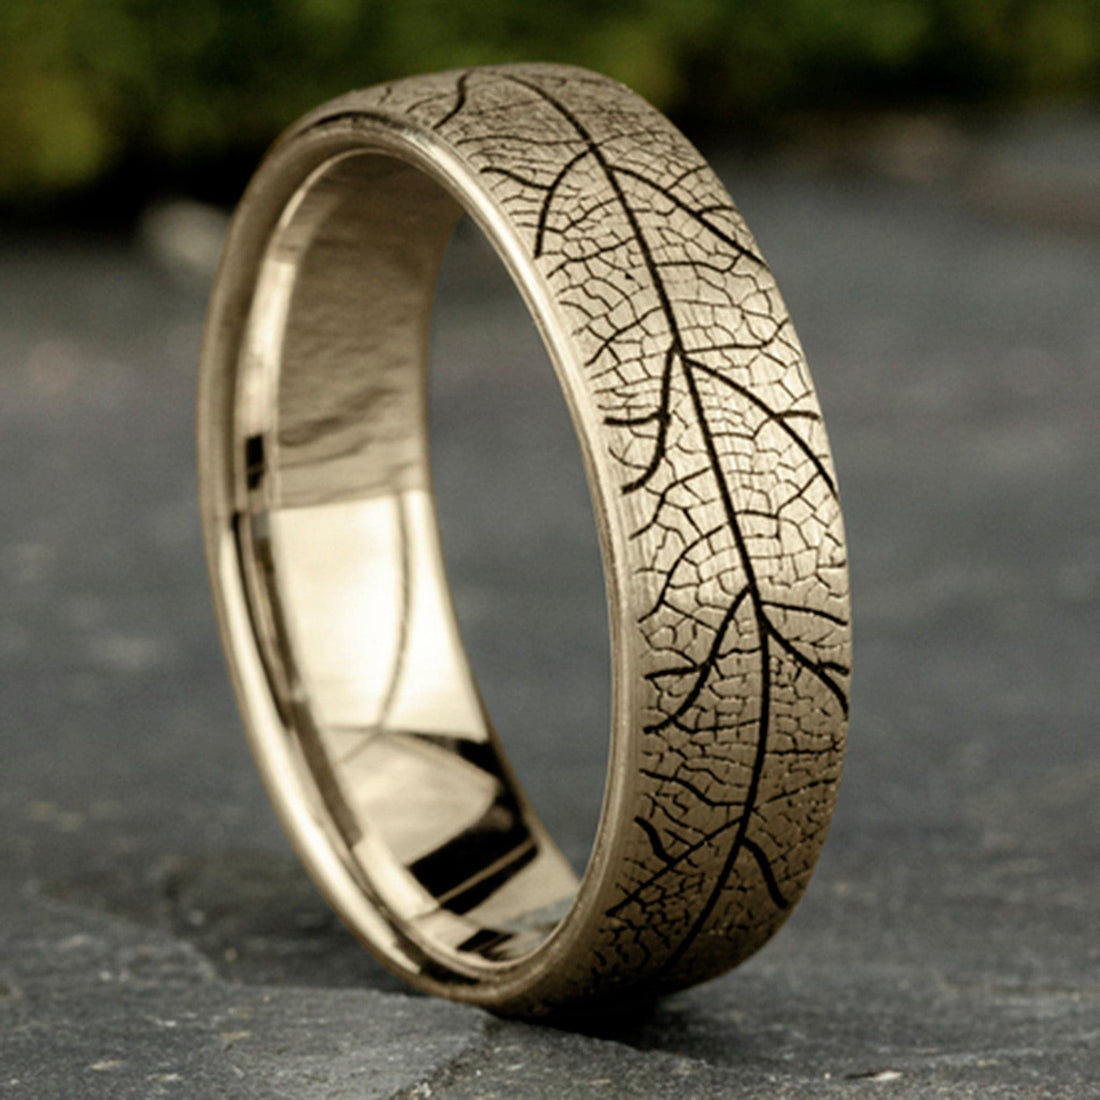 Gold Leaf Patterned Wedding Band for Men By Benchmark - Skeie's Jewelers